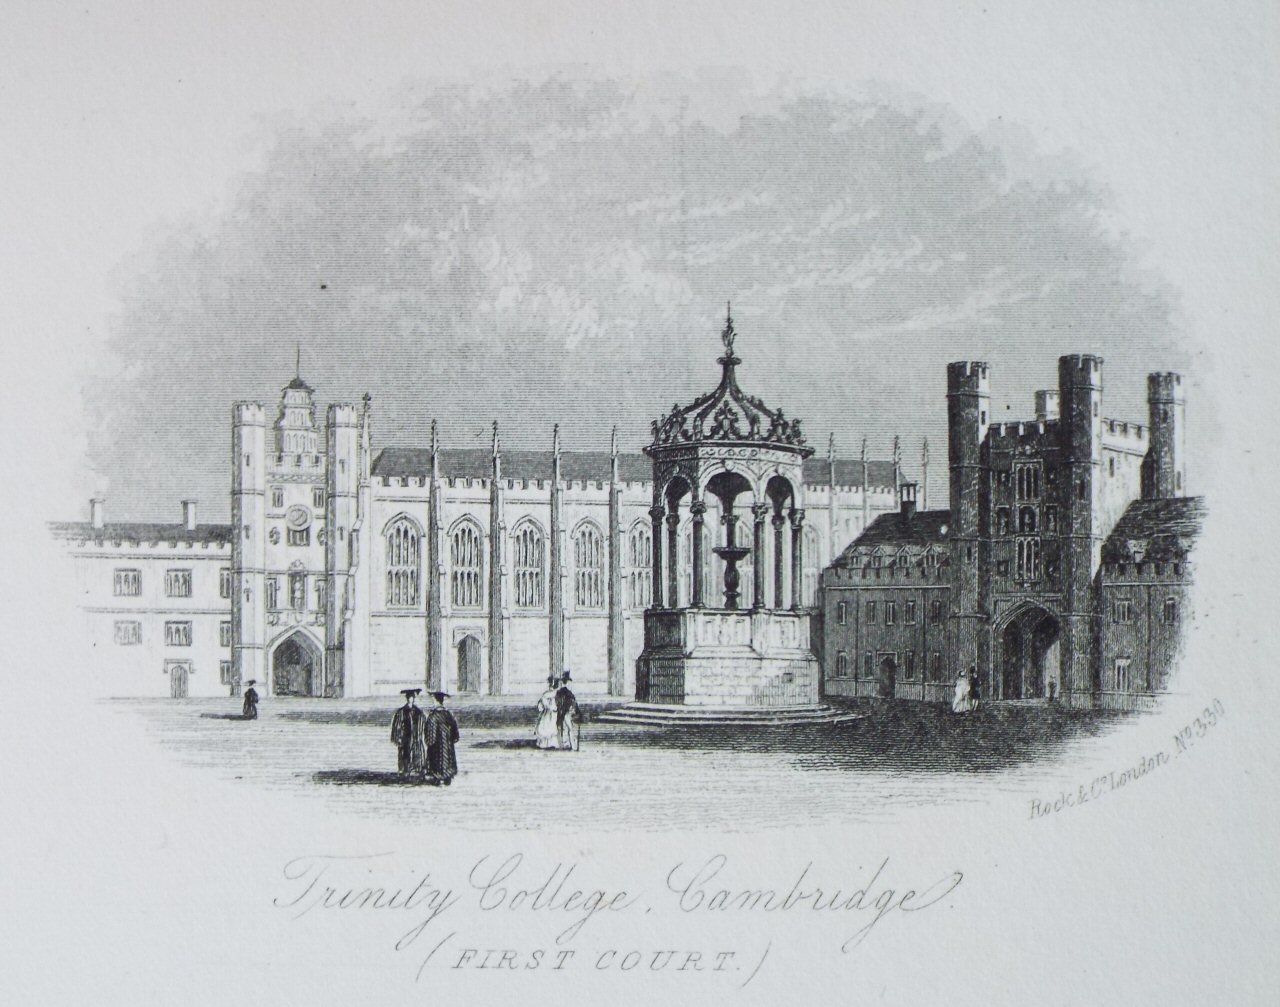 Steel Vignette - Trinity College, Cambridge. (First Court.) - Rock